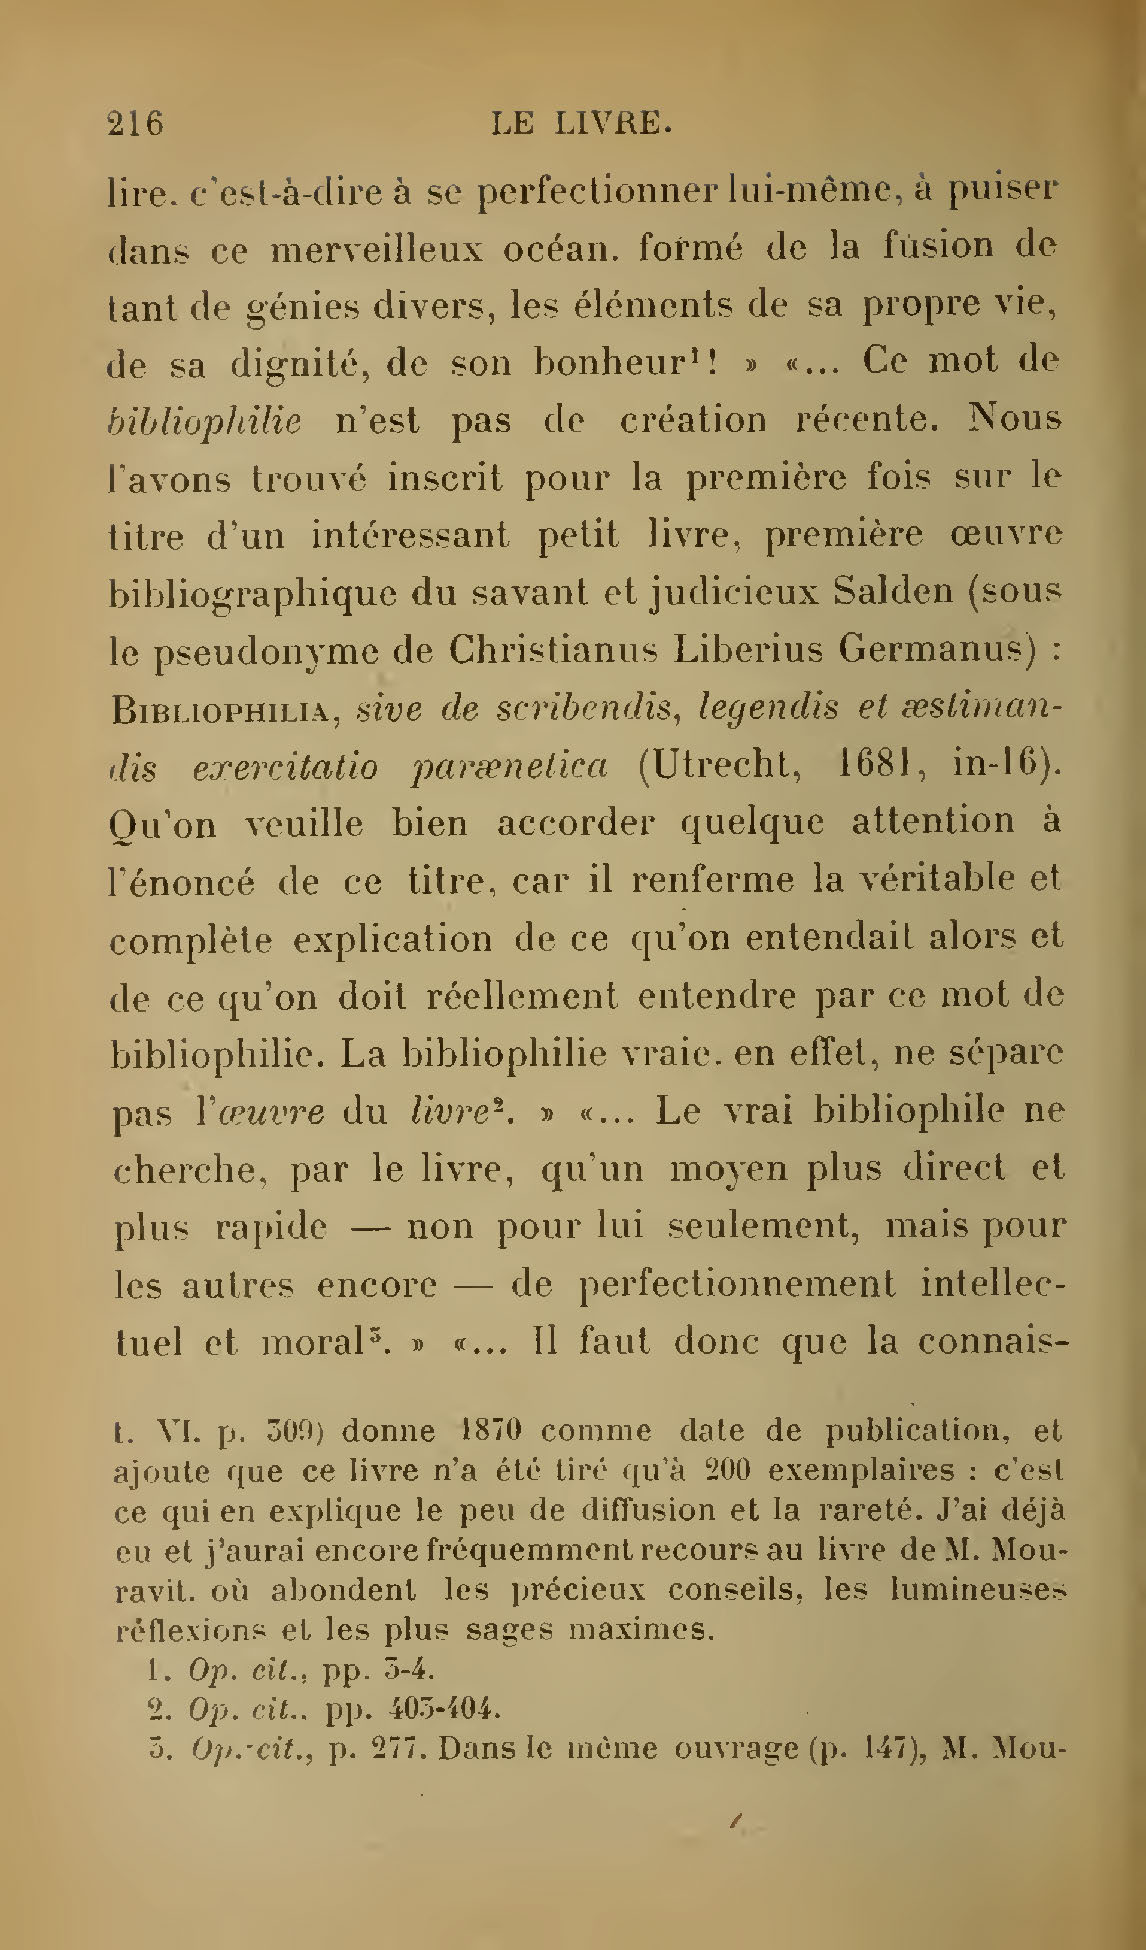 Albert Cim, Le Livre, t. I, p. 216.